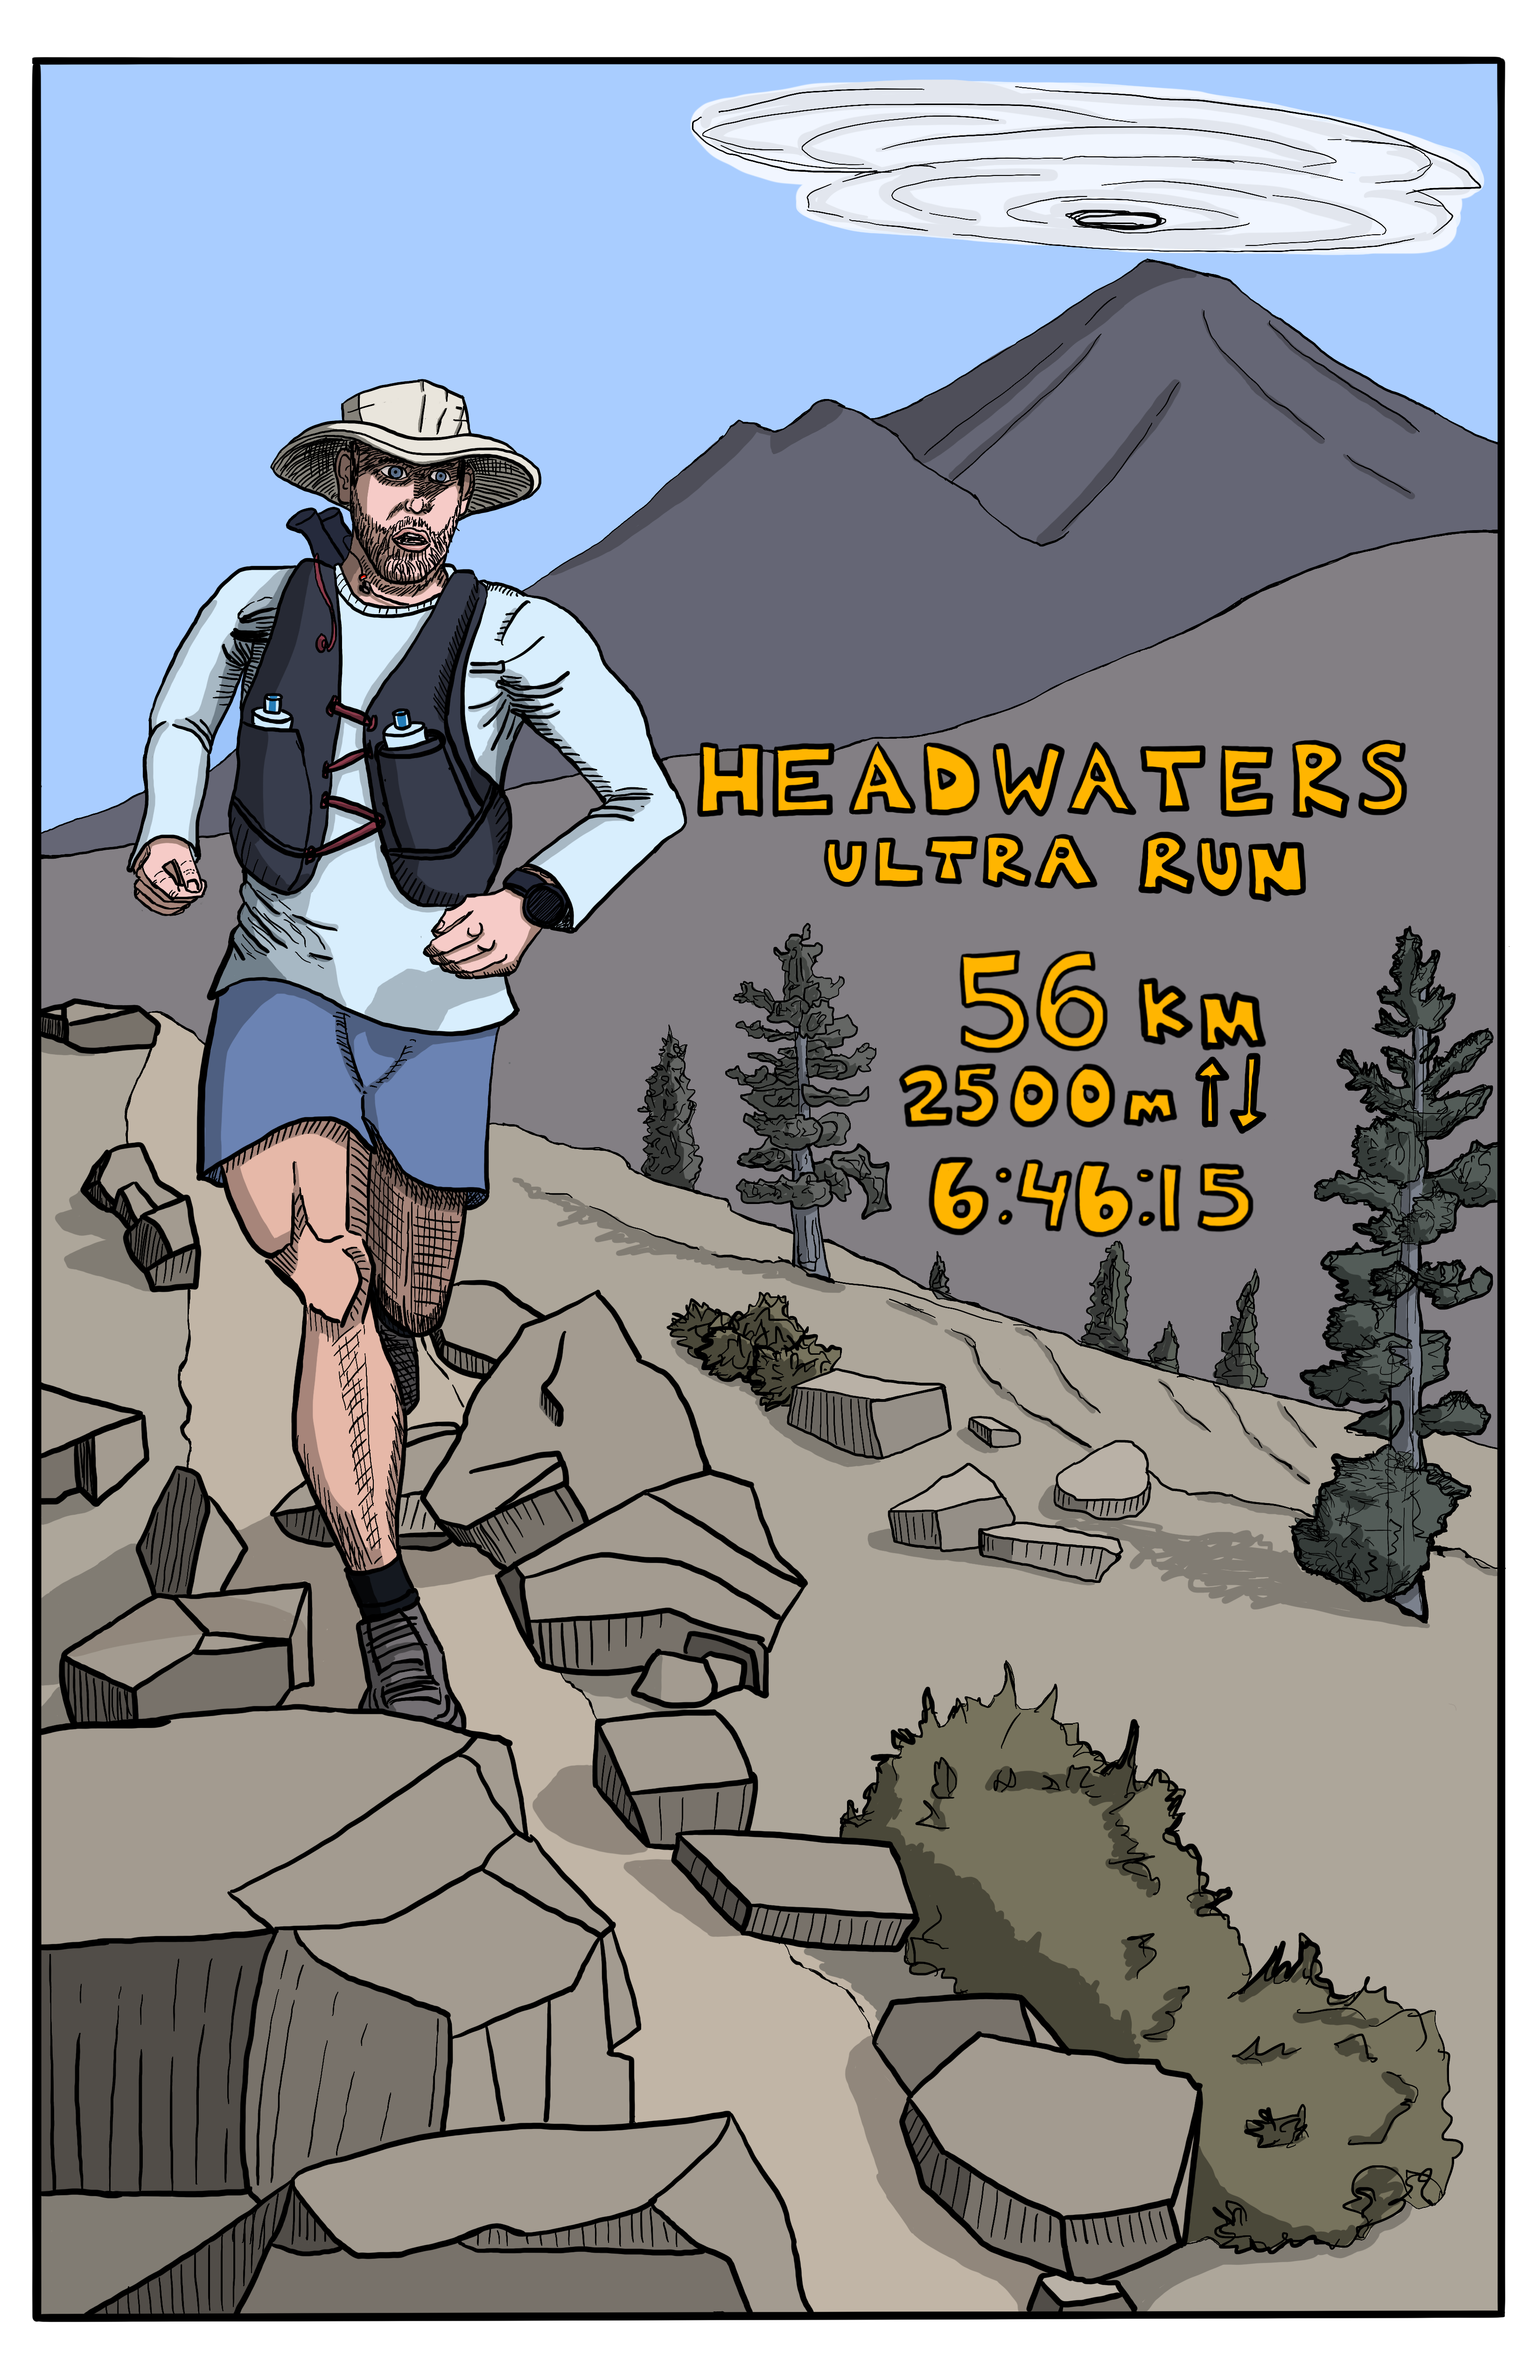 Comic book art for local trail ultra-run